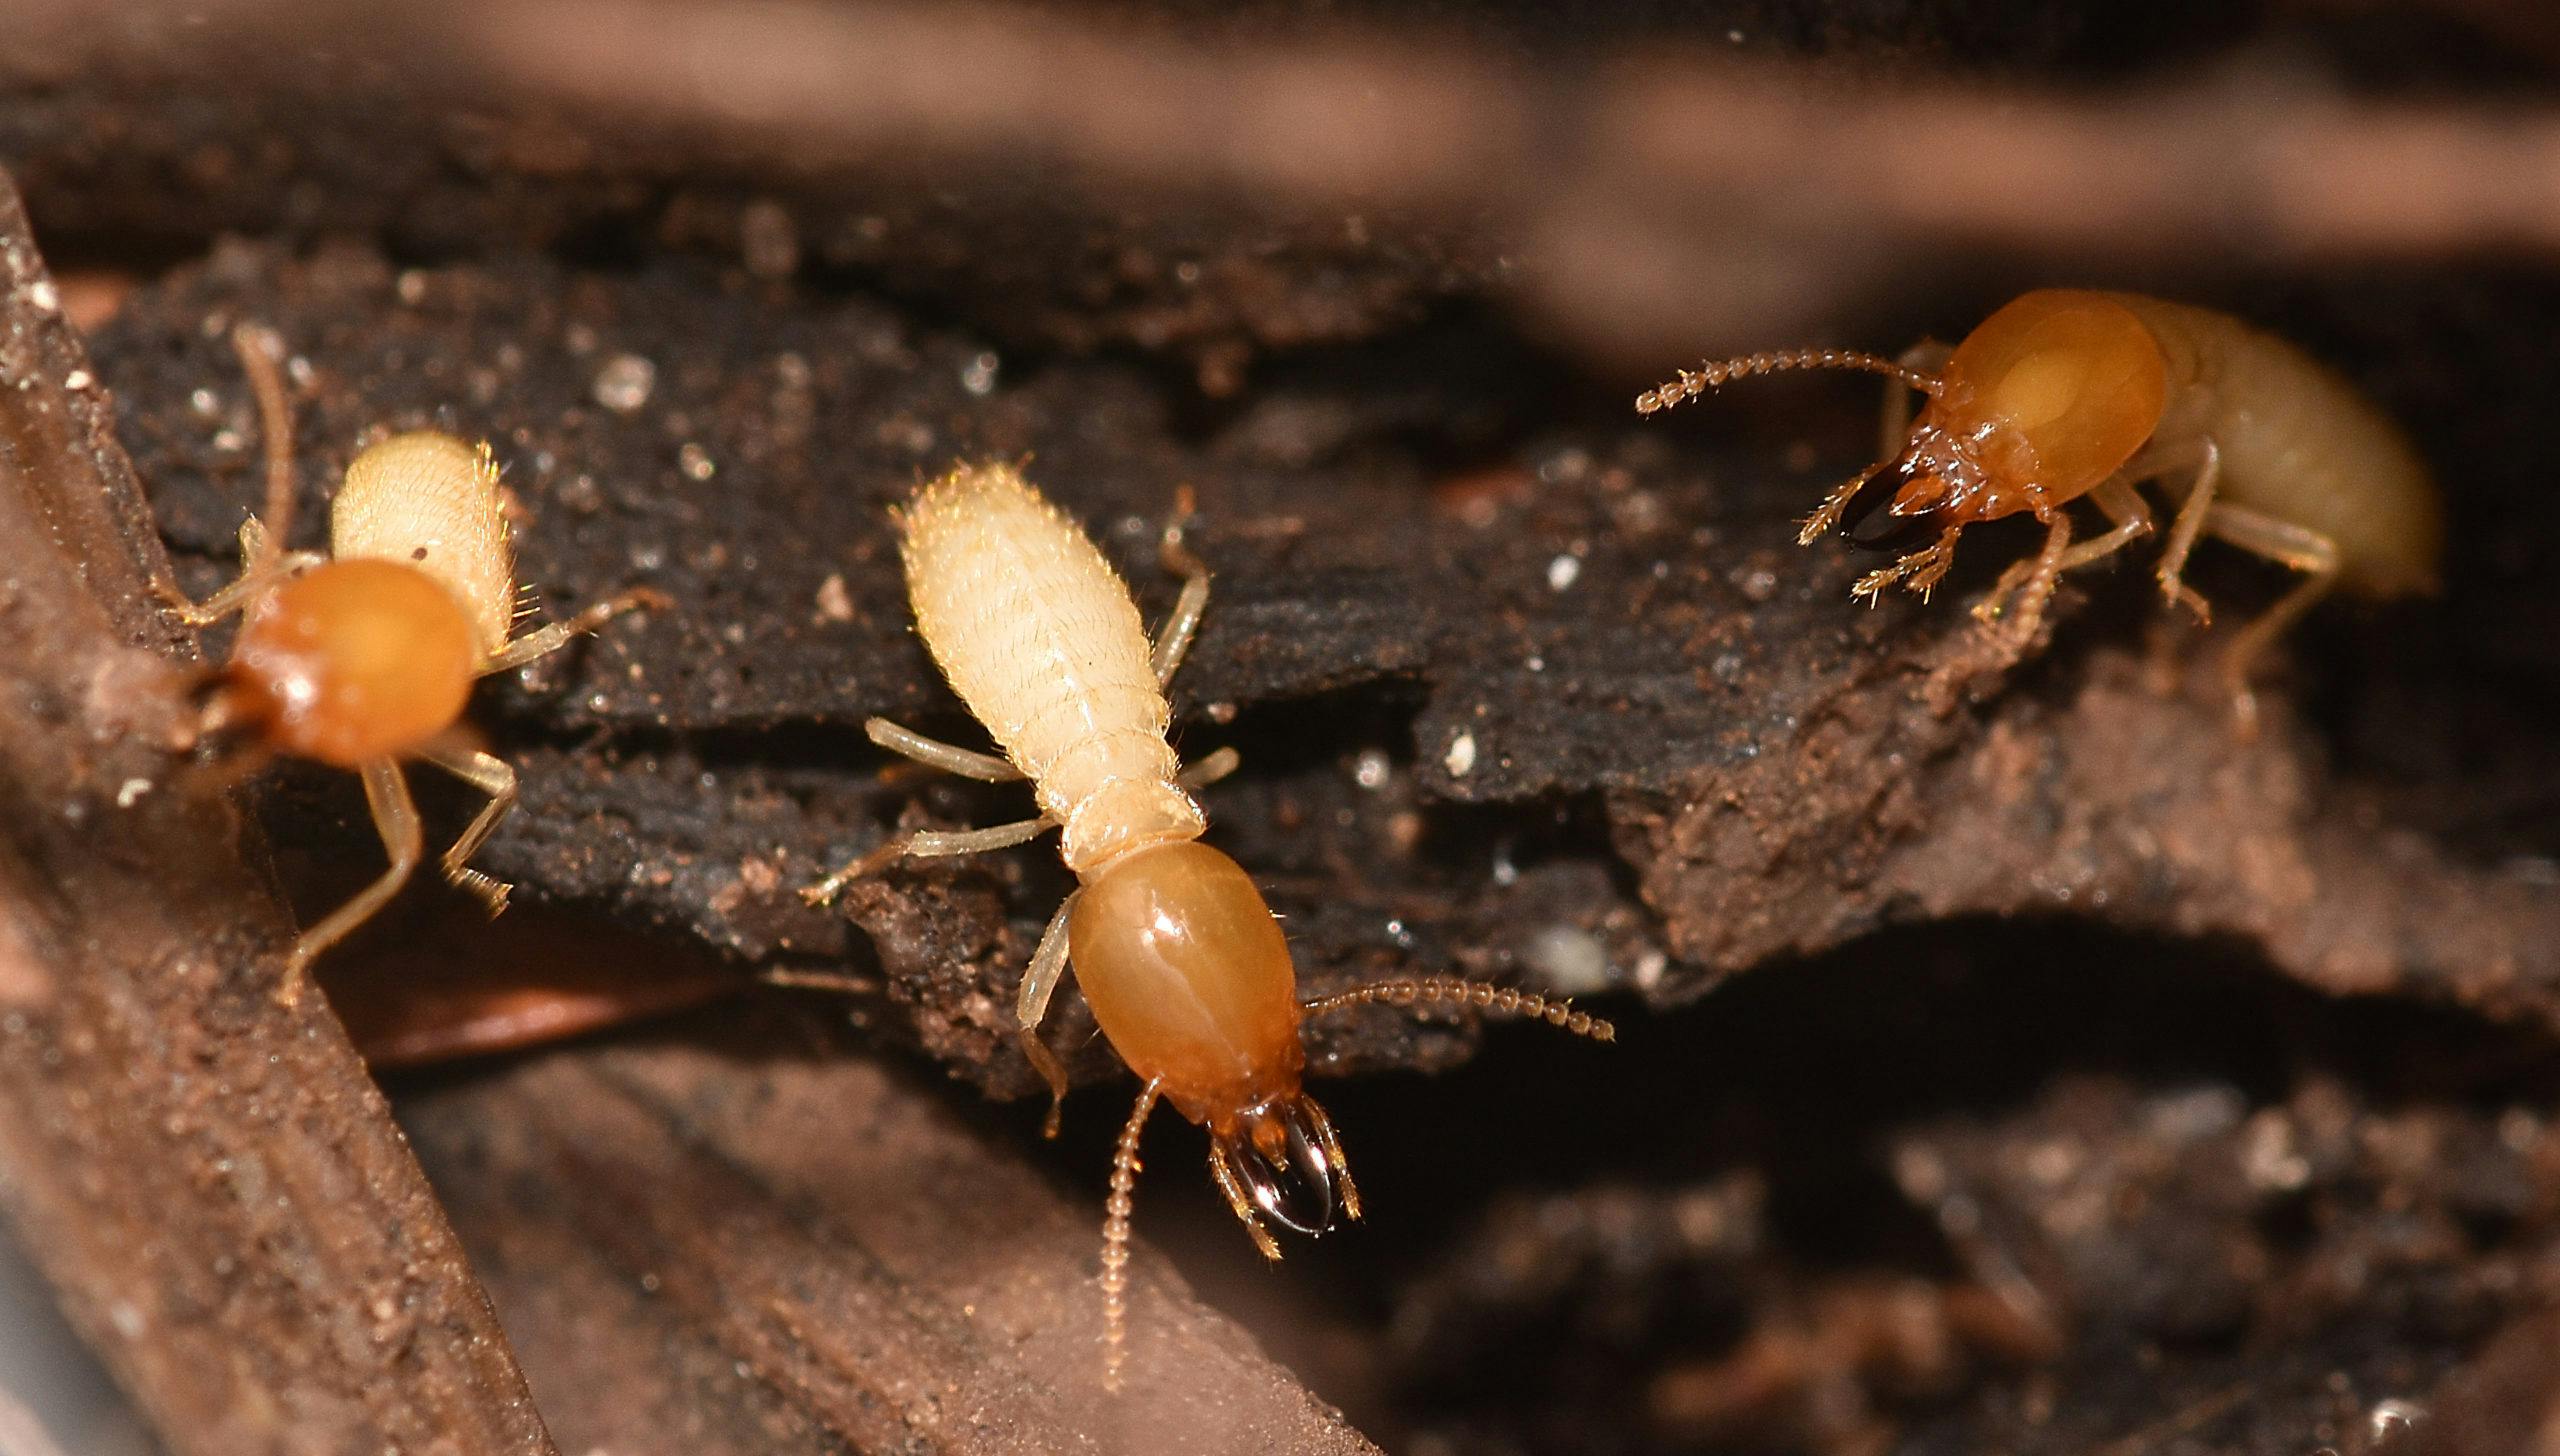 Formosan termite soldiers